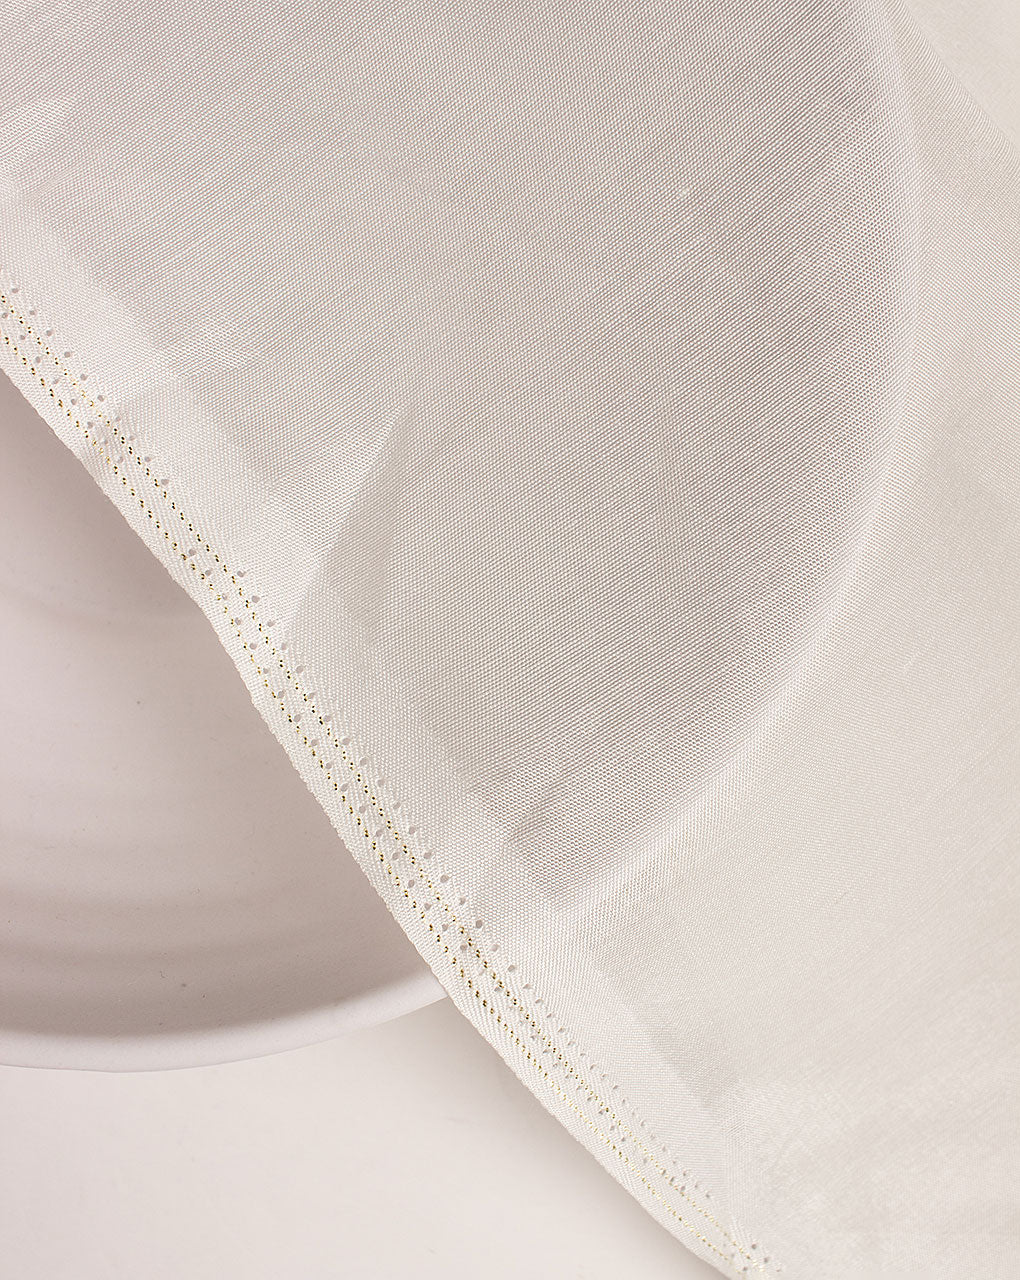 Dyeable Liva Bemberg Modal ( Cotton Silk Heavy ) Fabric - Fabriclore.com